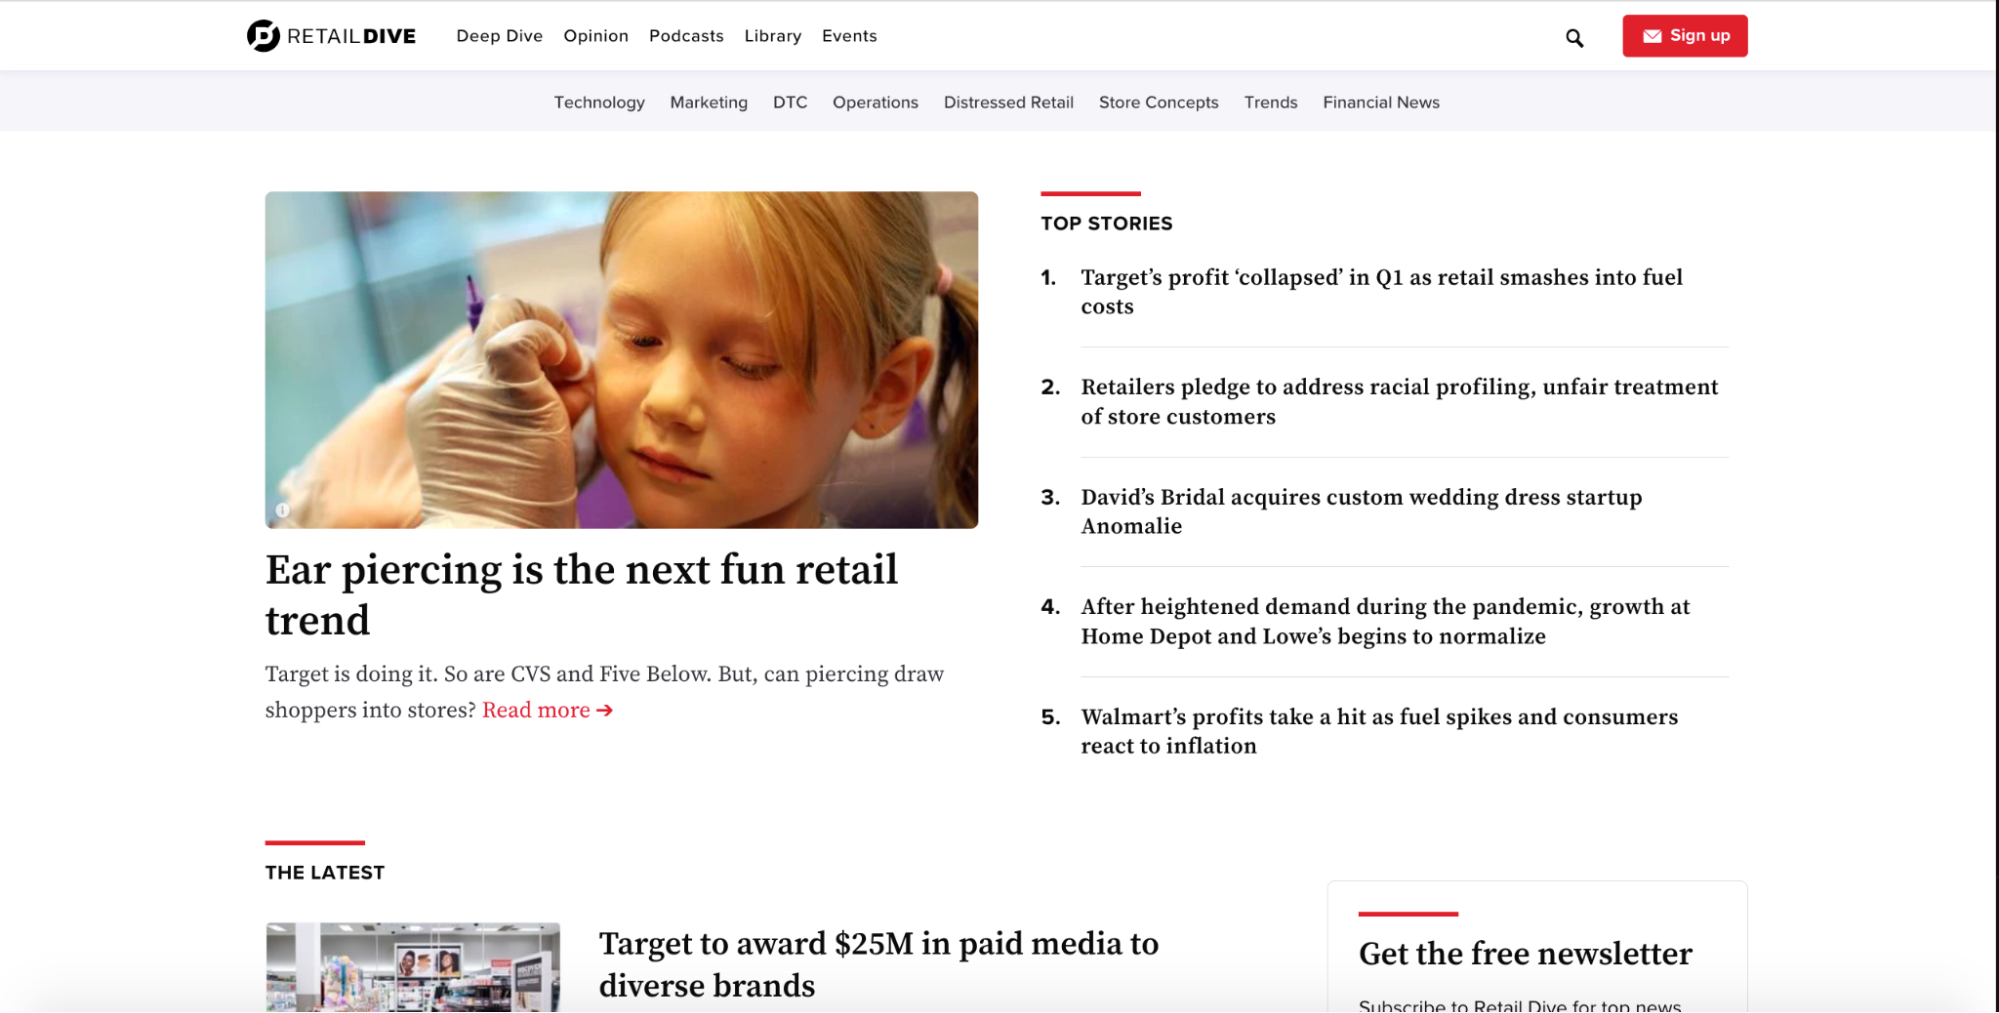 Retail Dive online retail news publication homepage